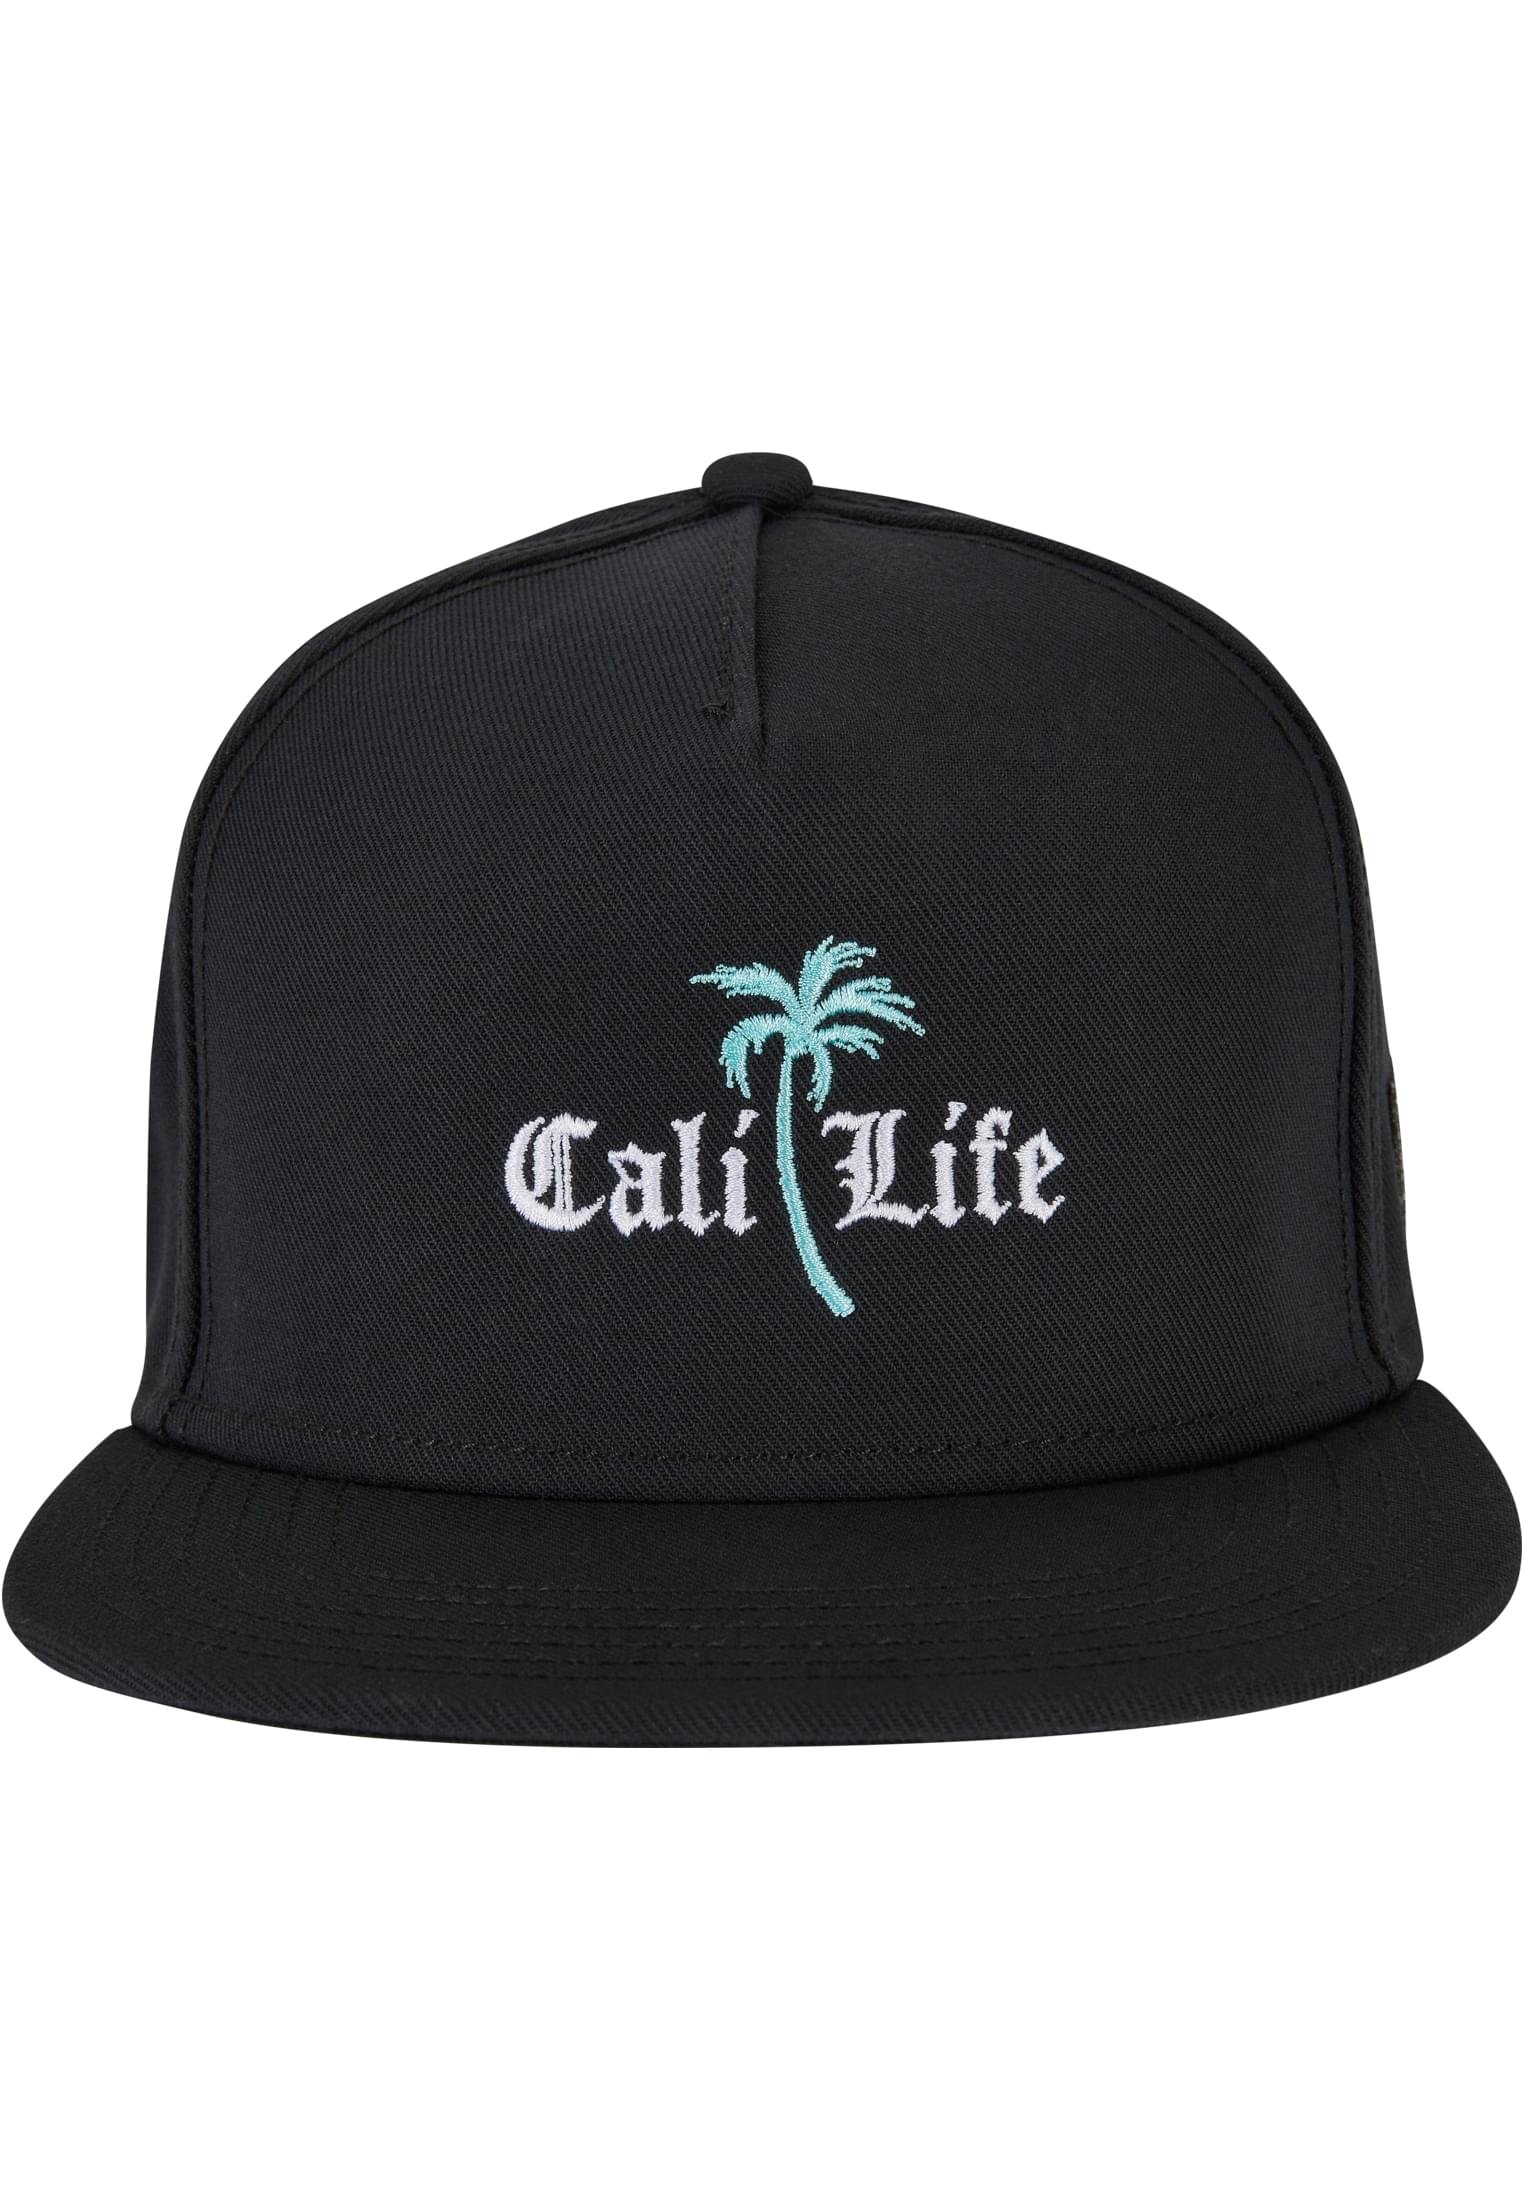 Cali Tree P Cap black one size